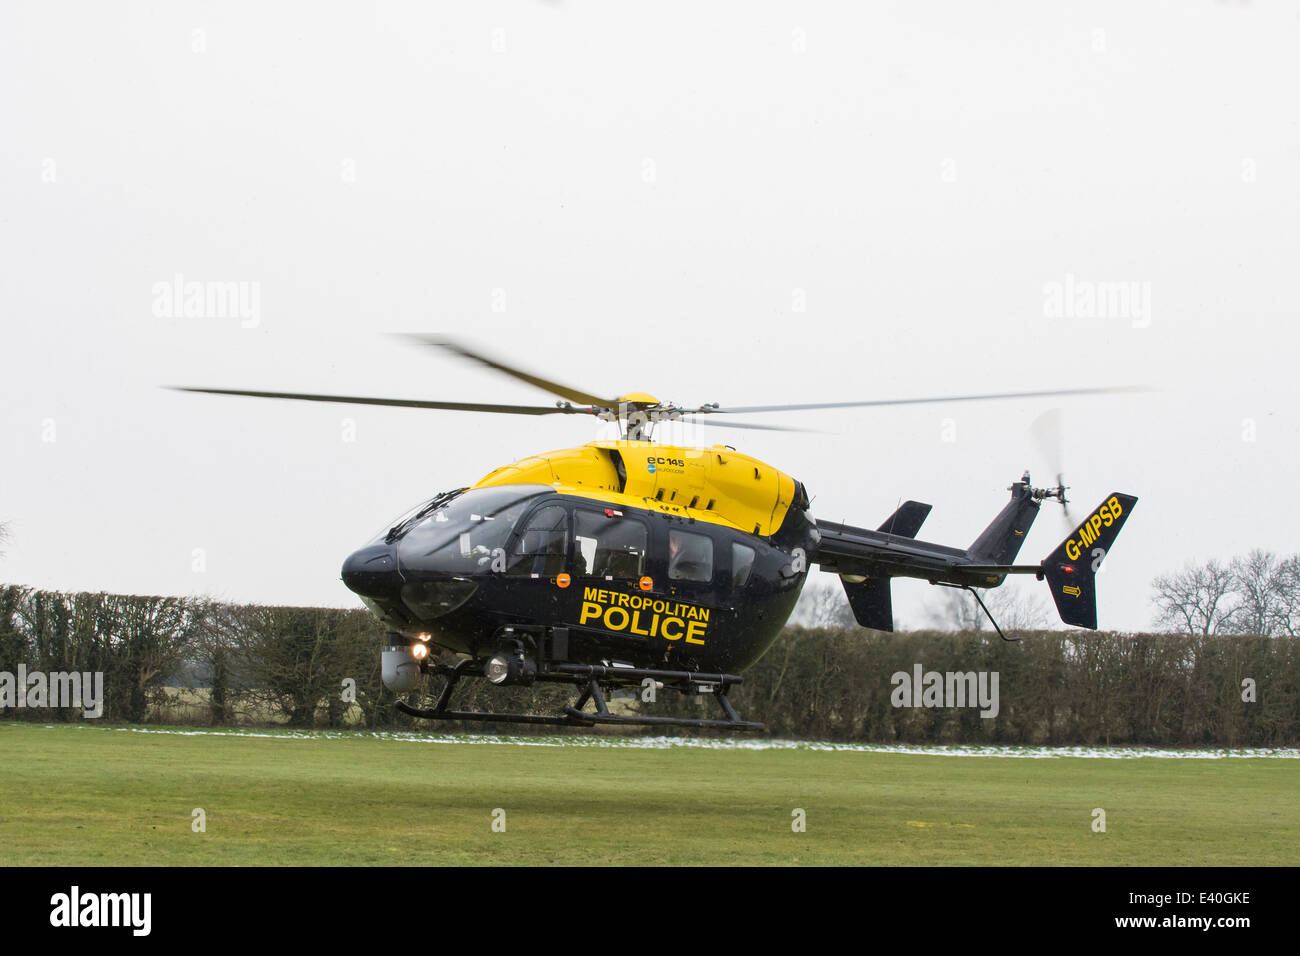 A Metropolitan Police Helicopter prepares to land at the Police Dog Training Establishment, Keston, Kent, England, U.K. Stock Photo